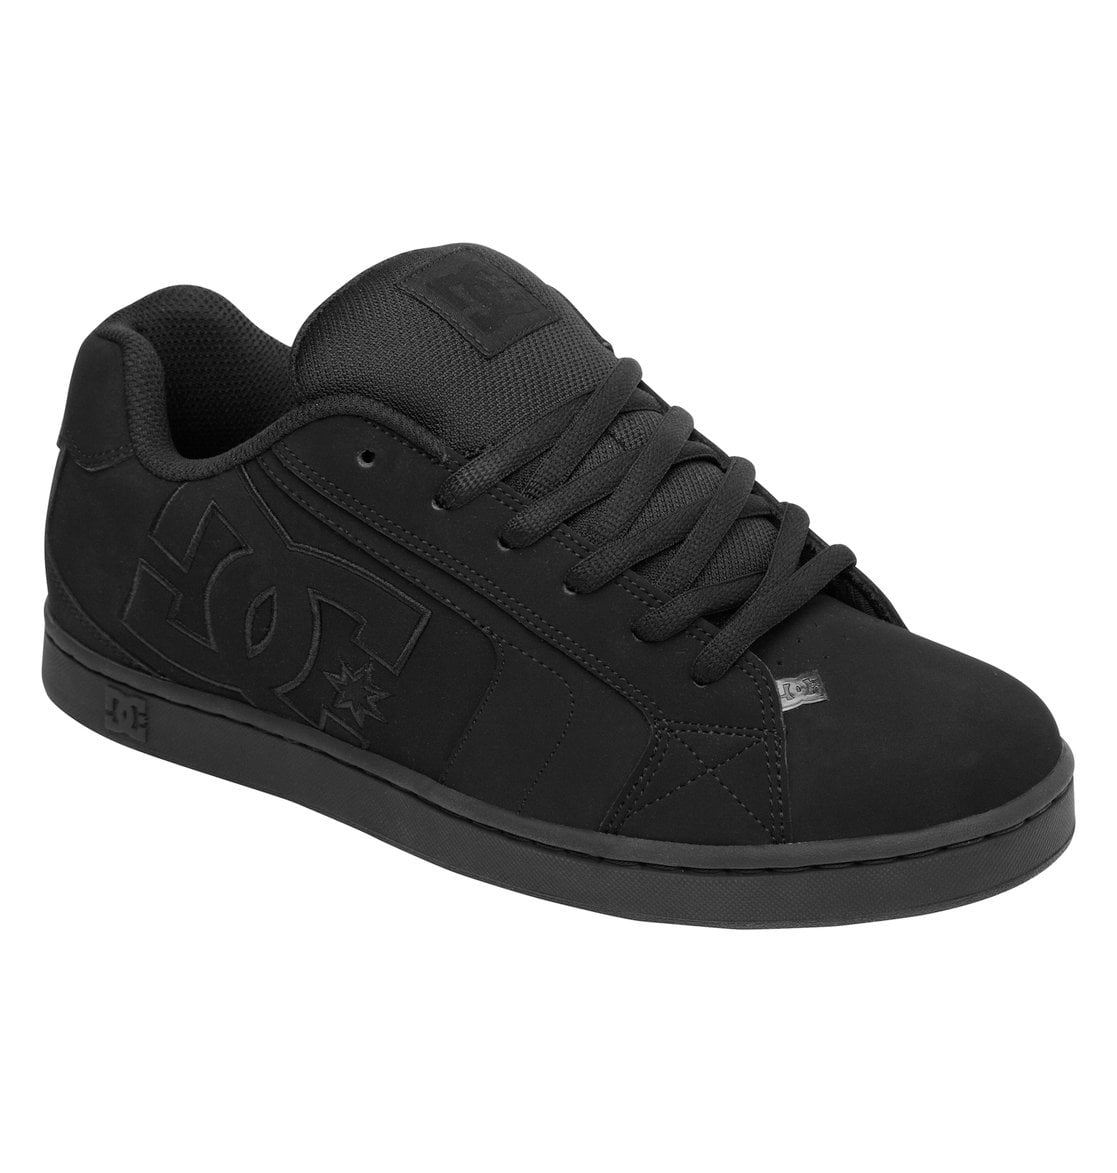 DC Pure SE 301024 Mens Black Leather Lace Up Athletic Skate Shoes 